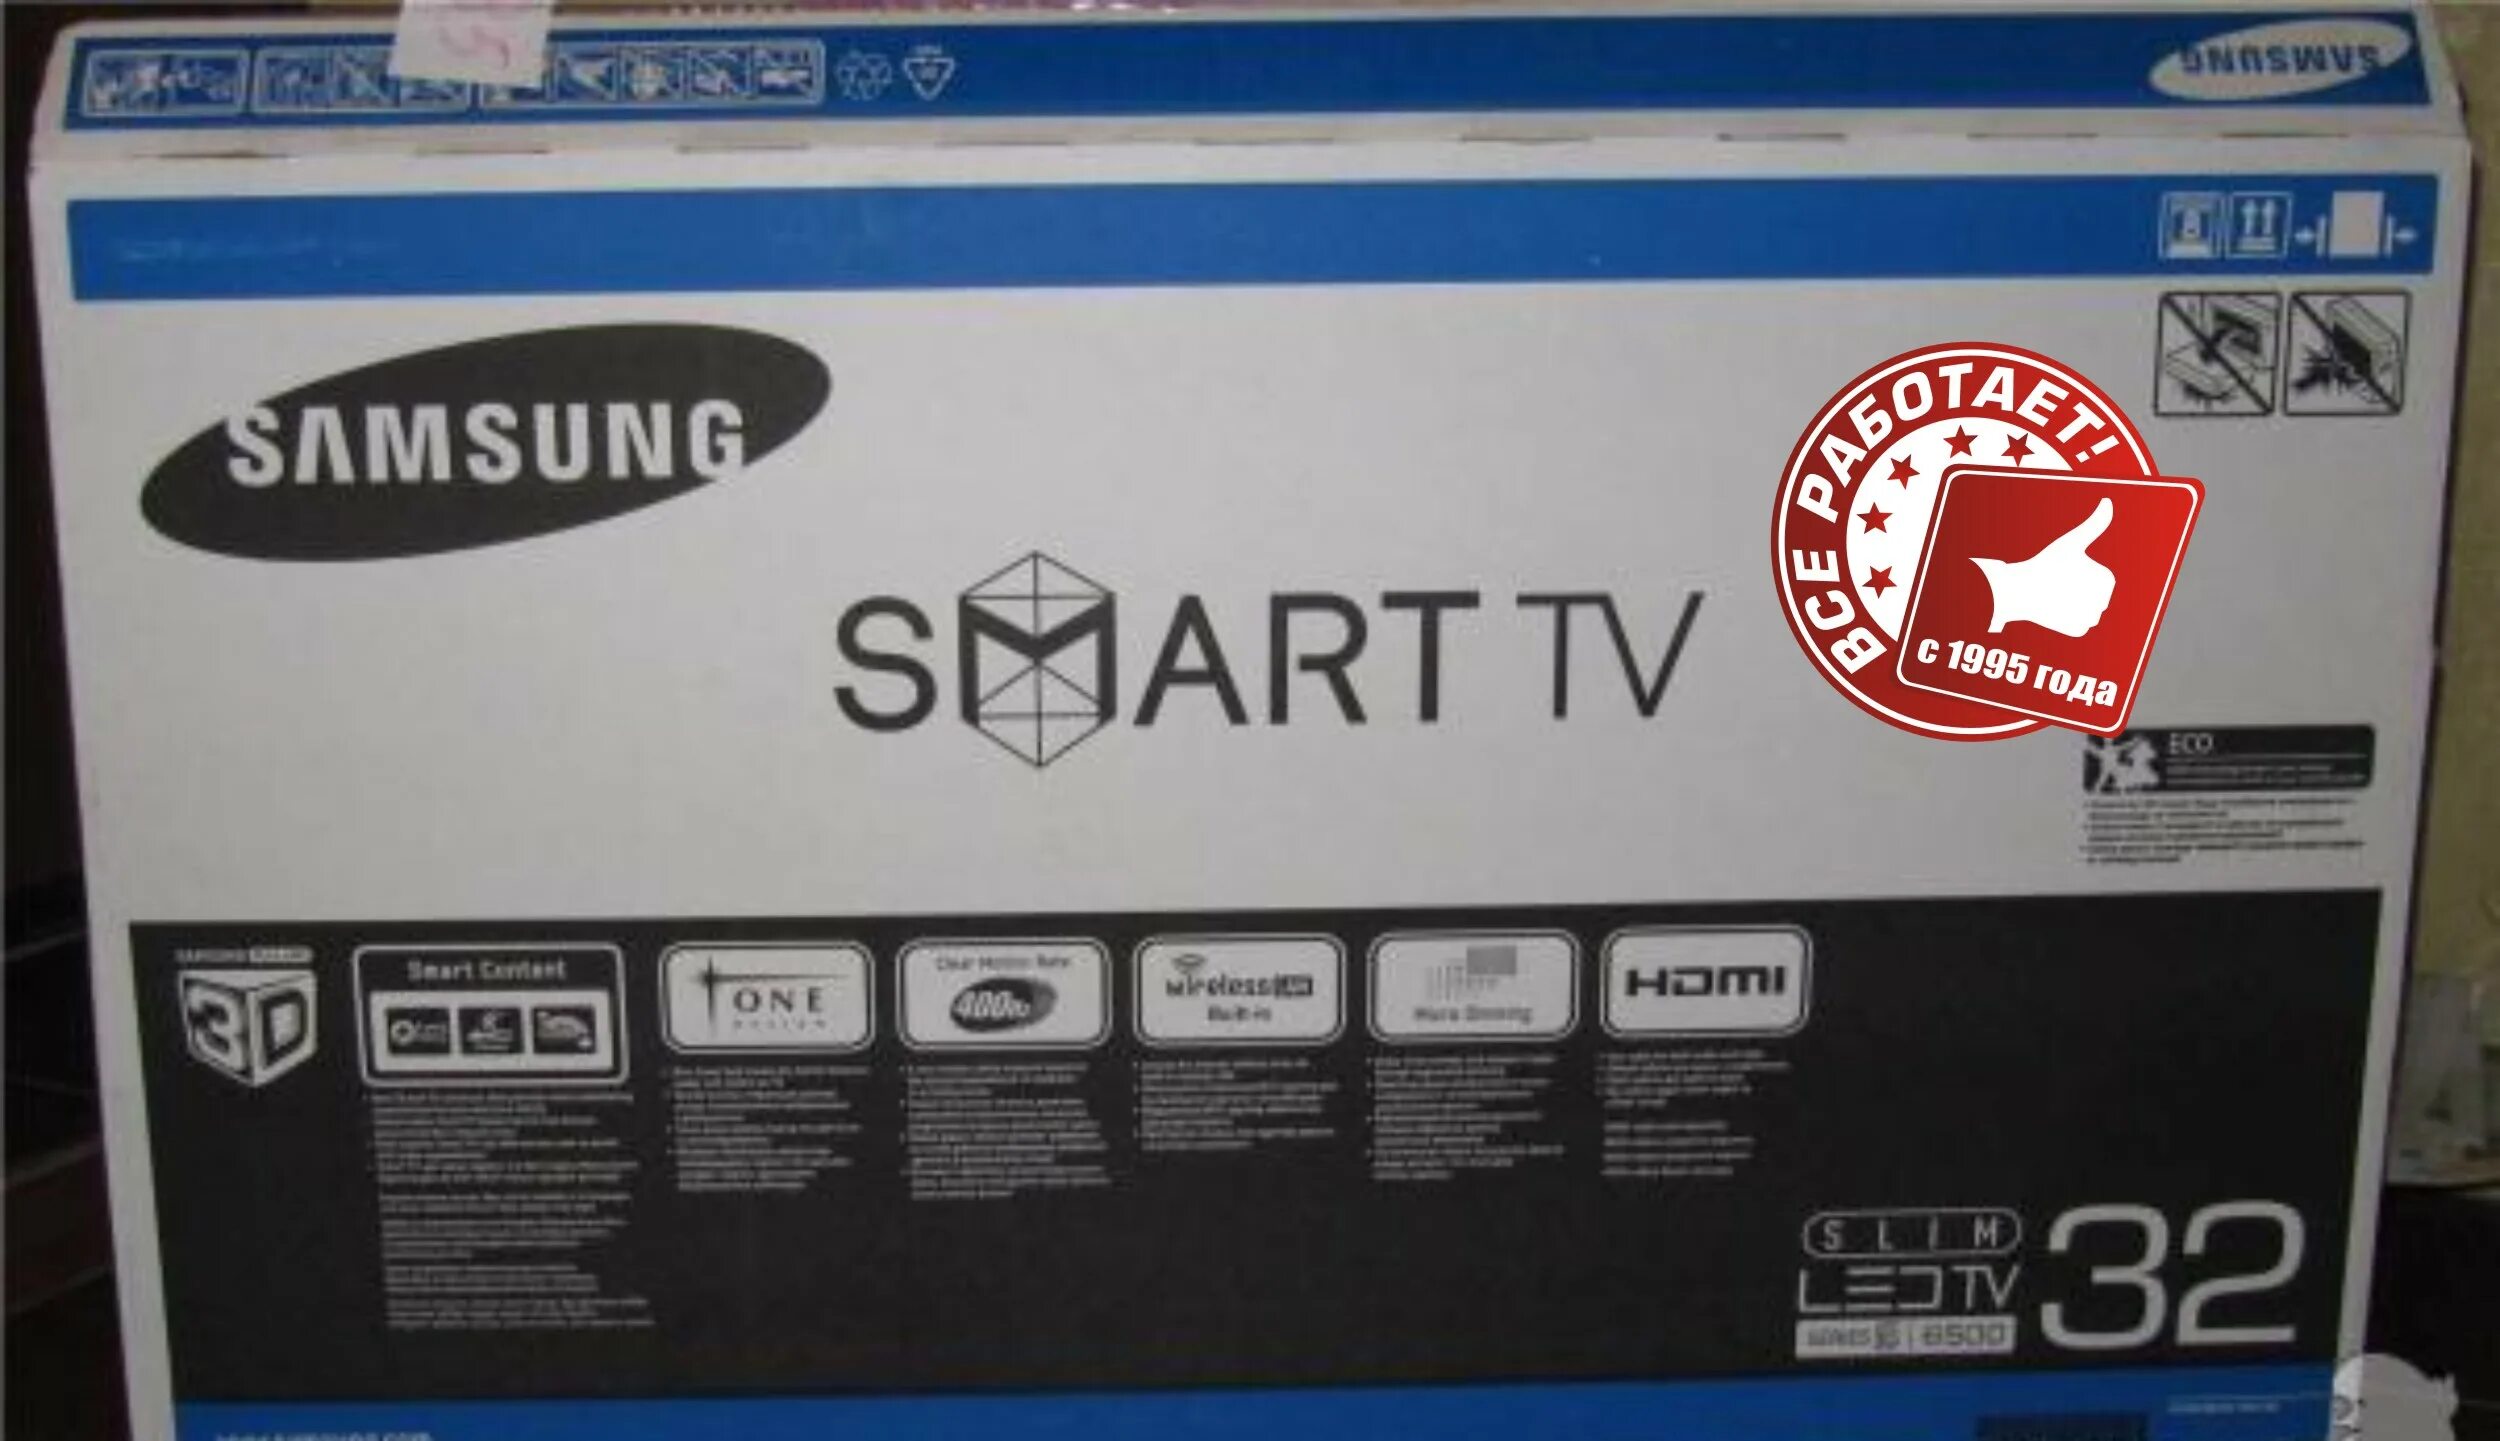 Размеры упаковки телевизора. Габариты коробки телевизора самсунг 32 дюйма. Коробка от телевизора самсунг 32 дюйма. Samsung Smart TV 32 коробка. Упаковка телевизора Samsung.